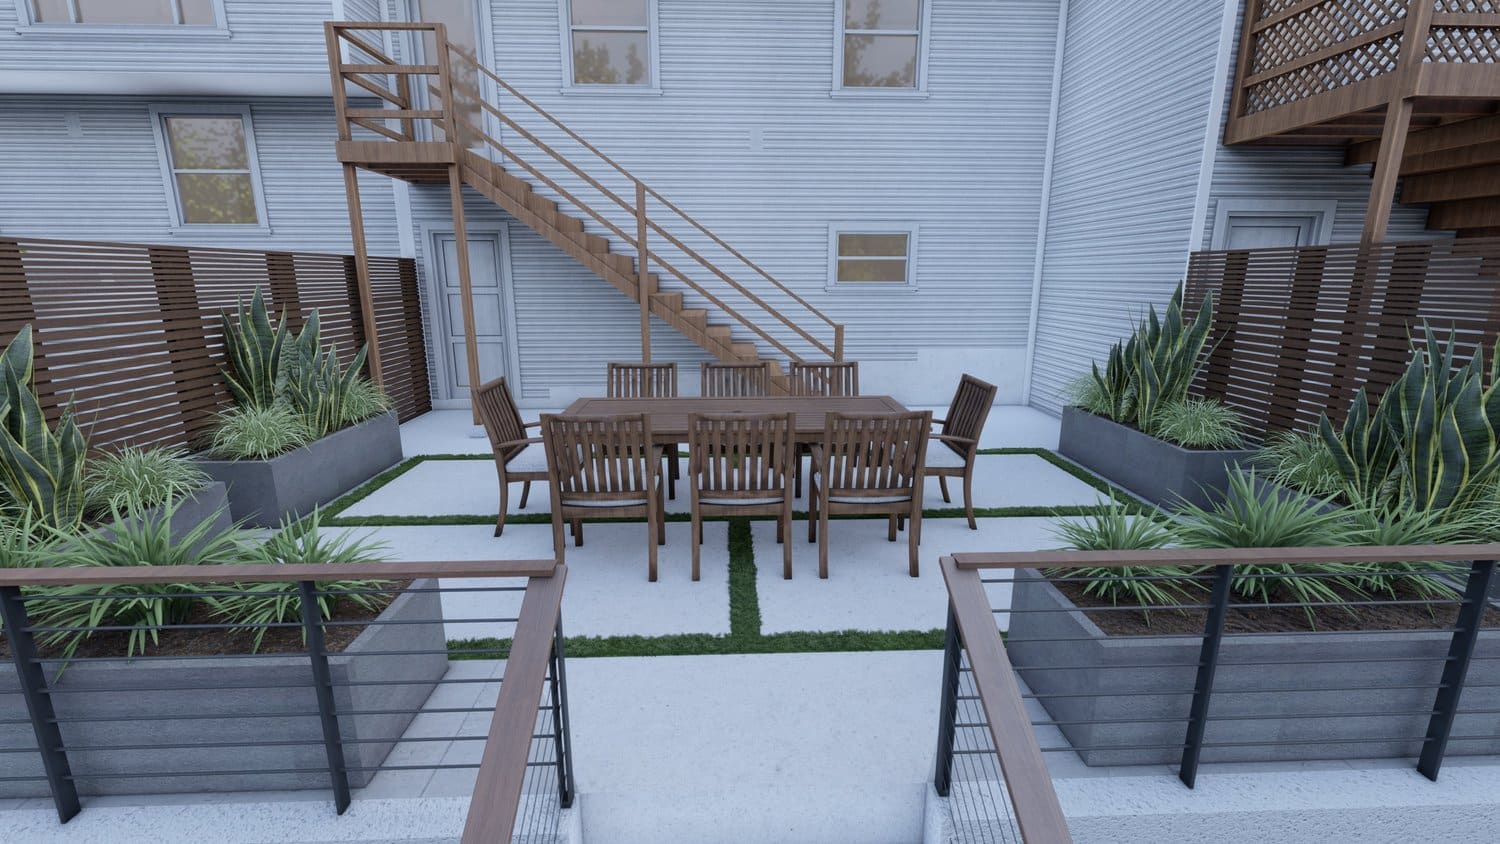 San Francisco backyard paver patio dining area with raised garden beds